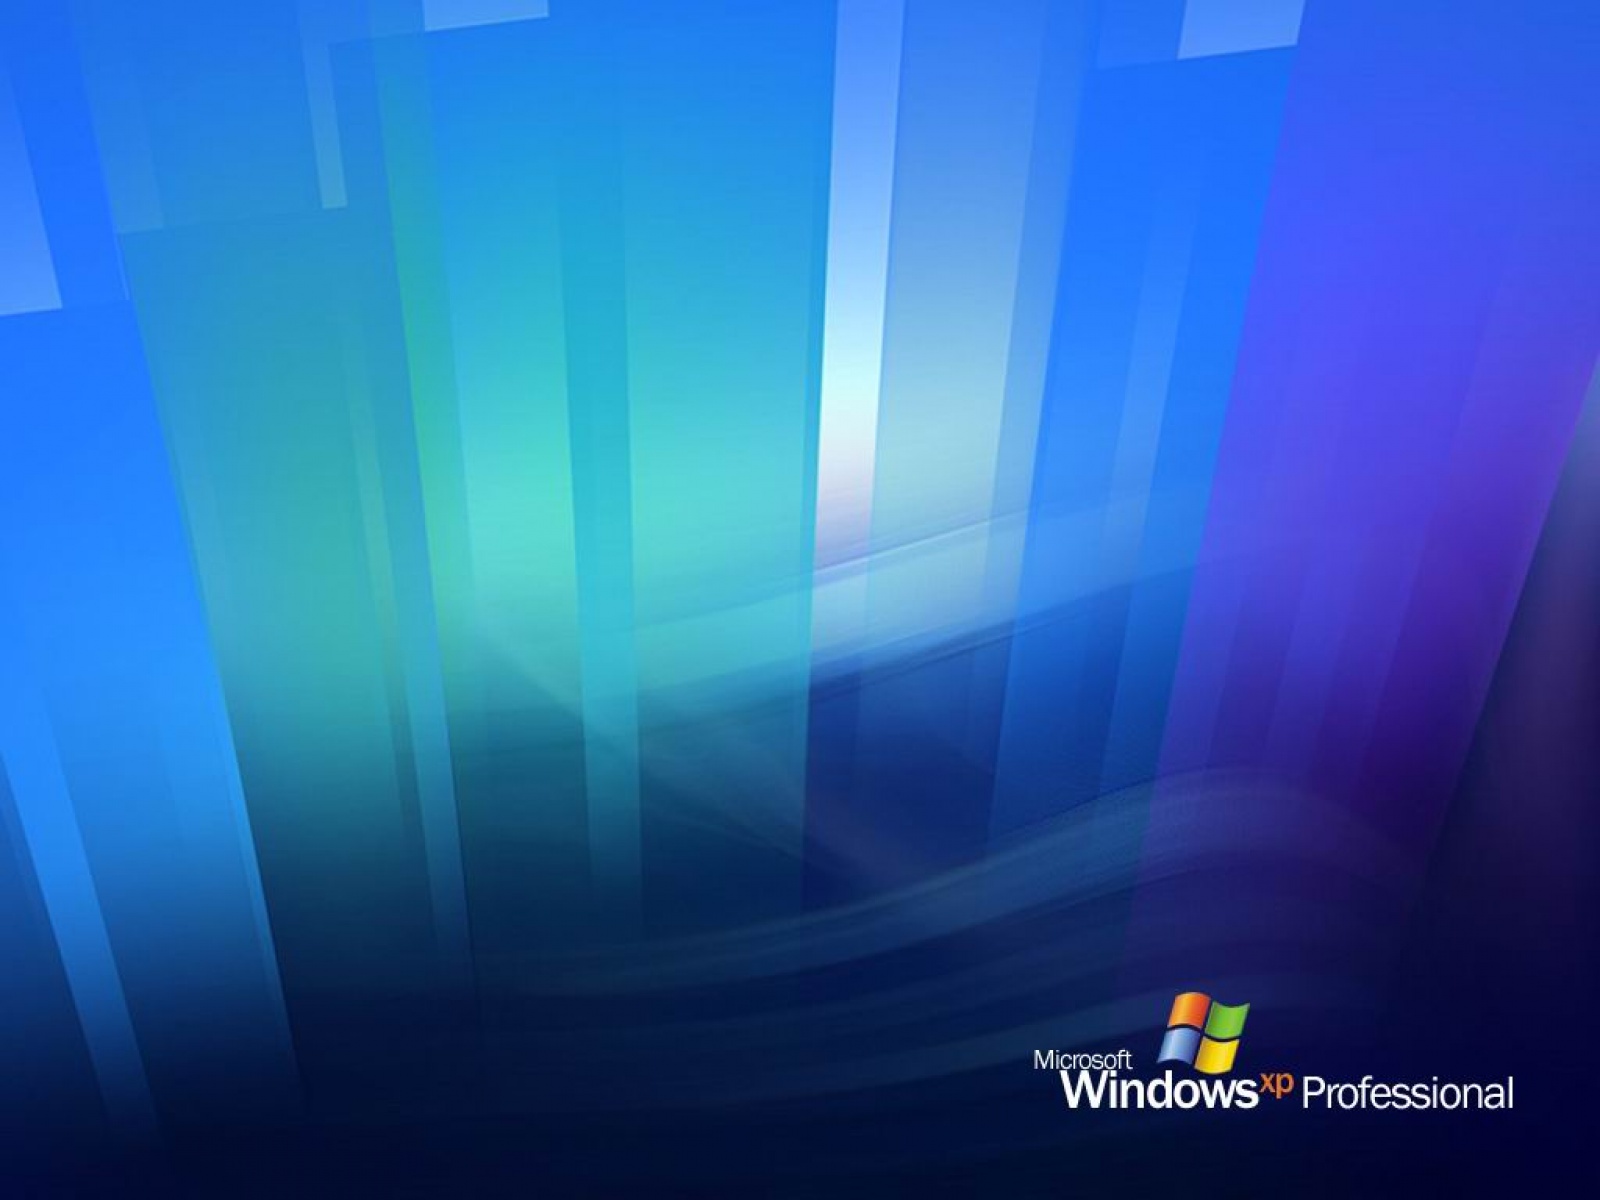  48 Windows 10 Pro Wallpaper  on WallpaperSafari